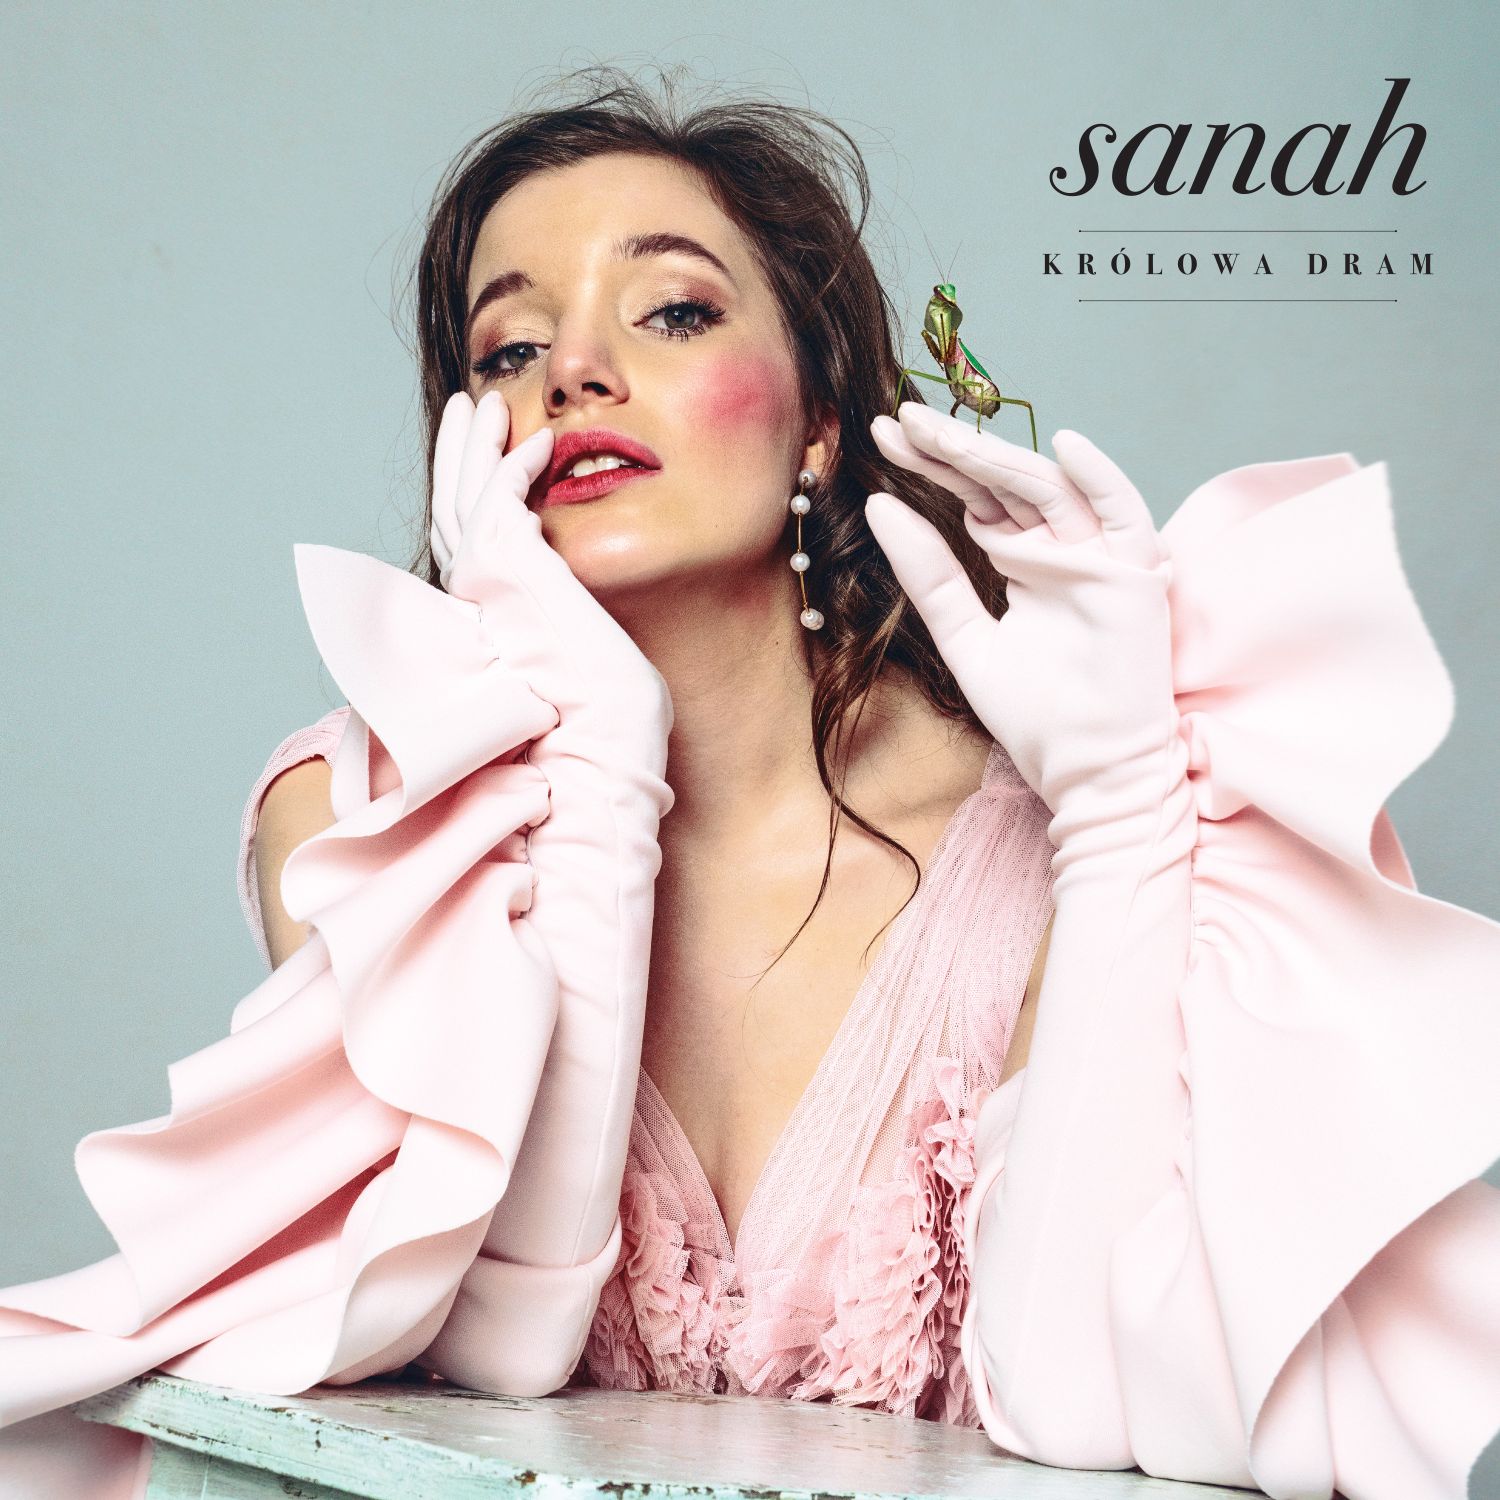 Sanah — Oto cała ja cover artwork